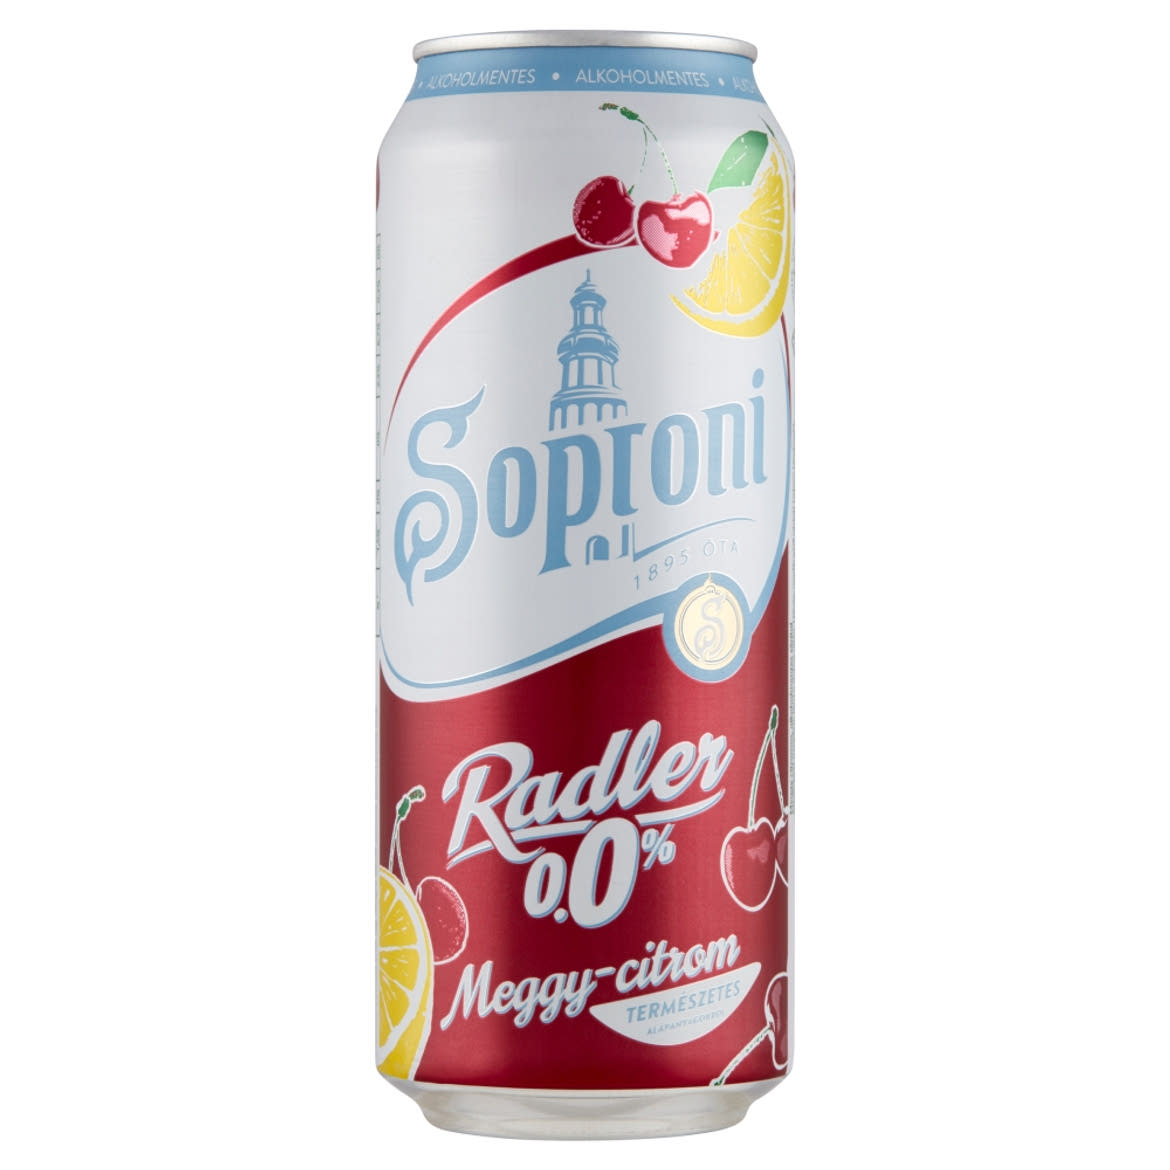 Soproni Radler meggy-citromos alkoholmentes sörital